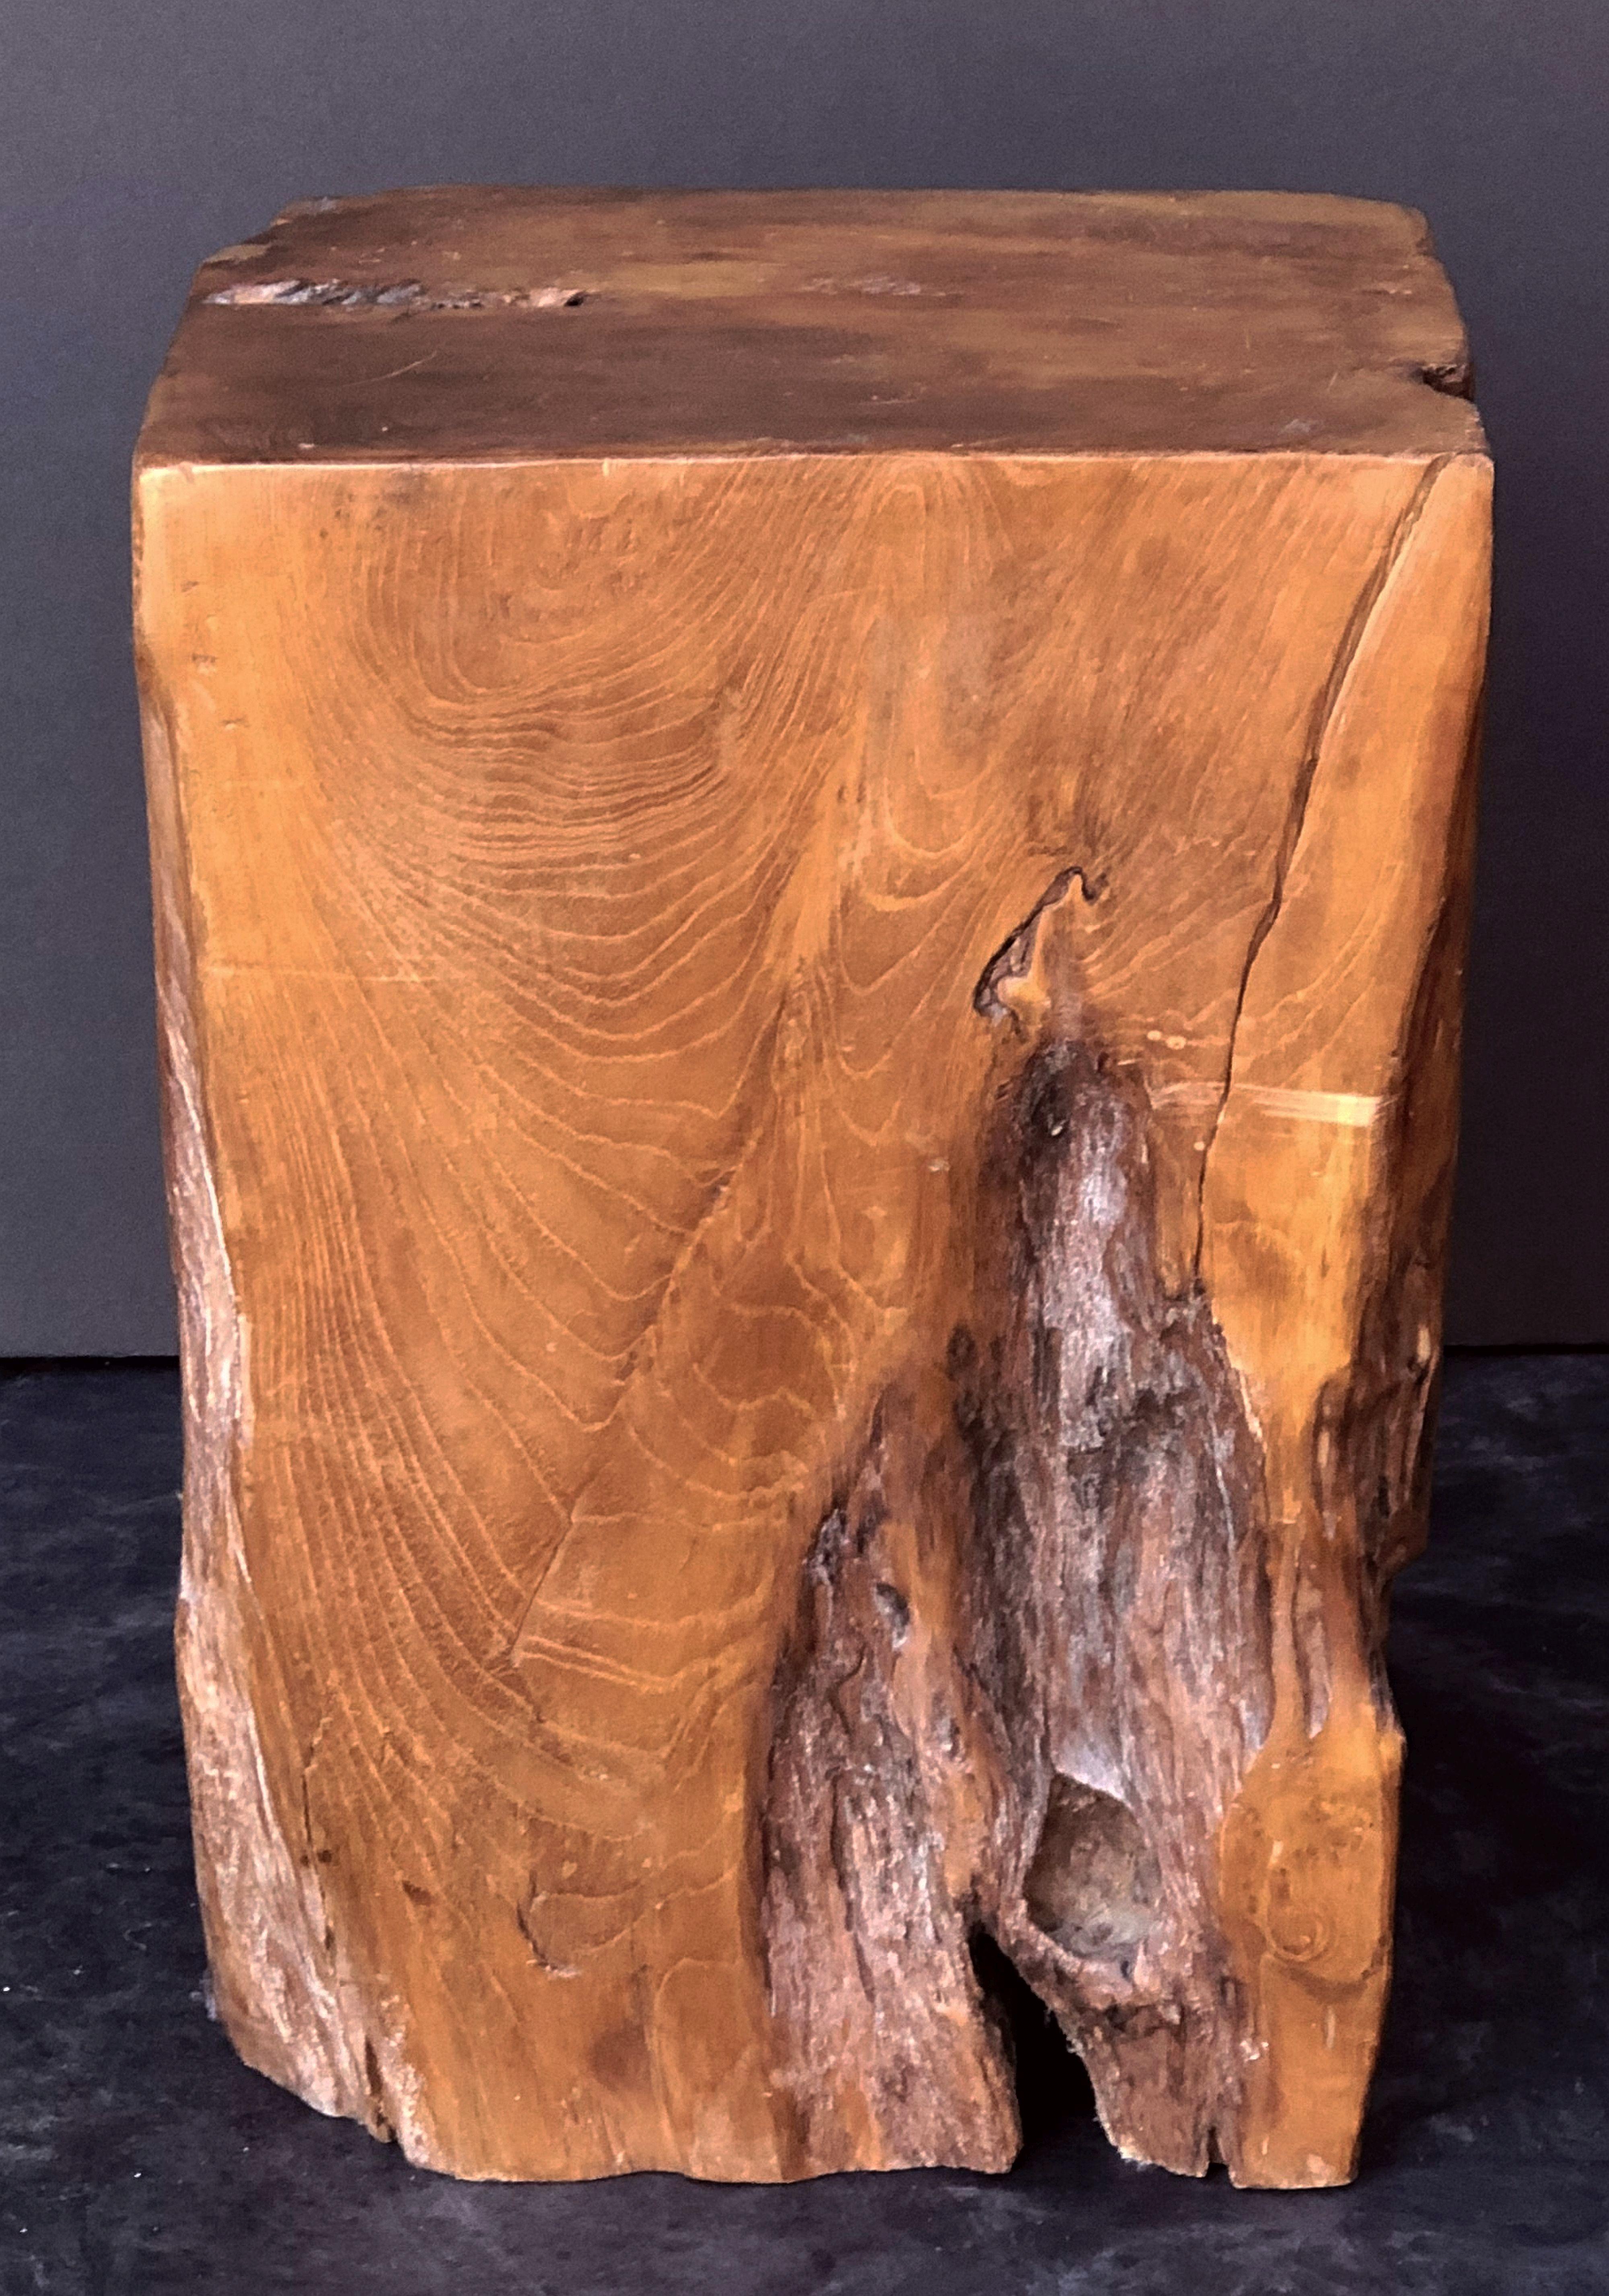 English Polished Wood Stool or Rustic Table 1